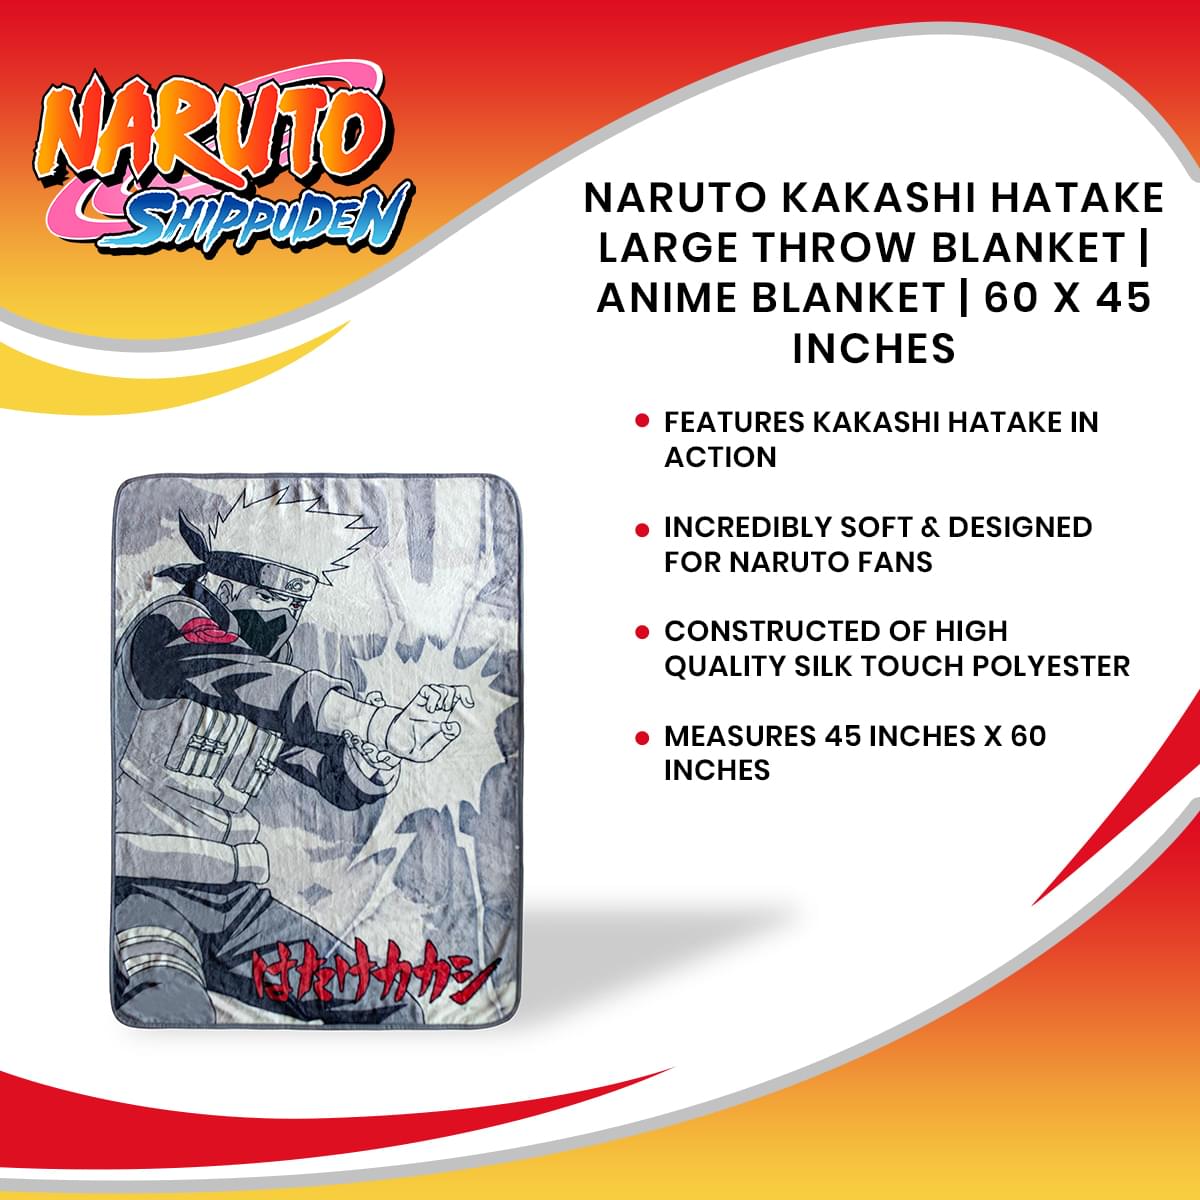 Naruto Kakashi Hatake Large Throw Blanket | Anime Blanket | 60 x 45 Inches